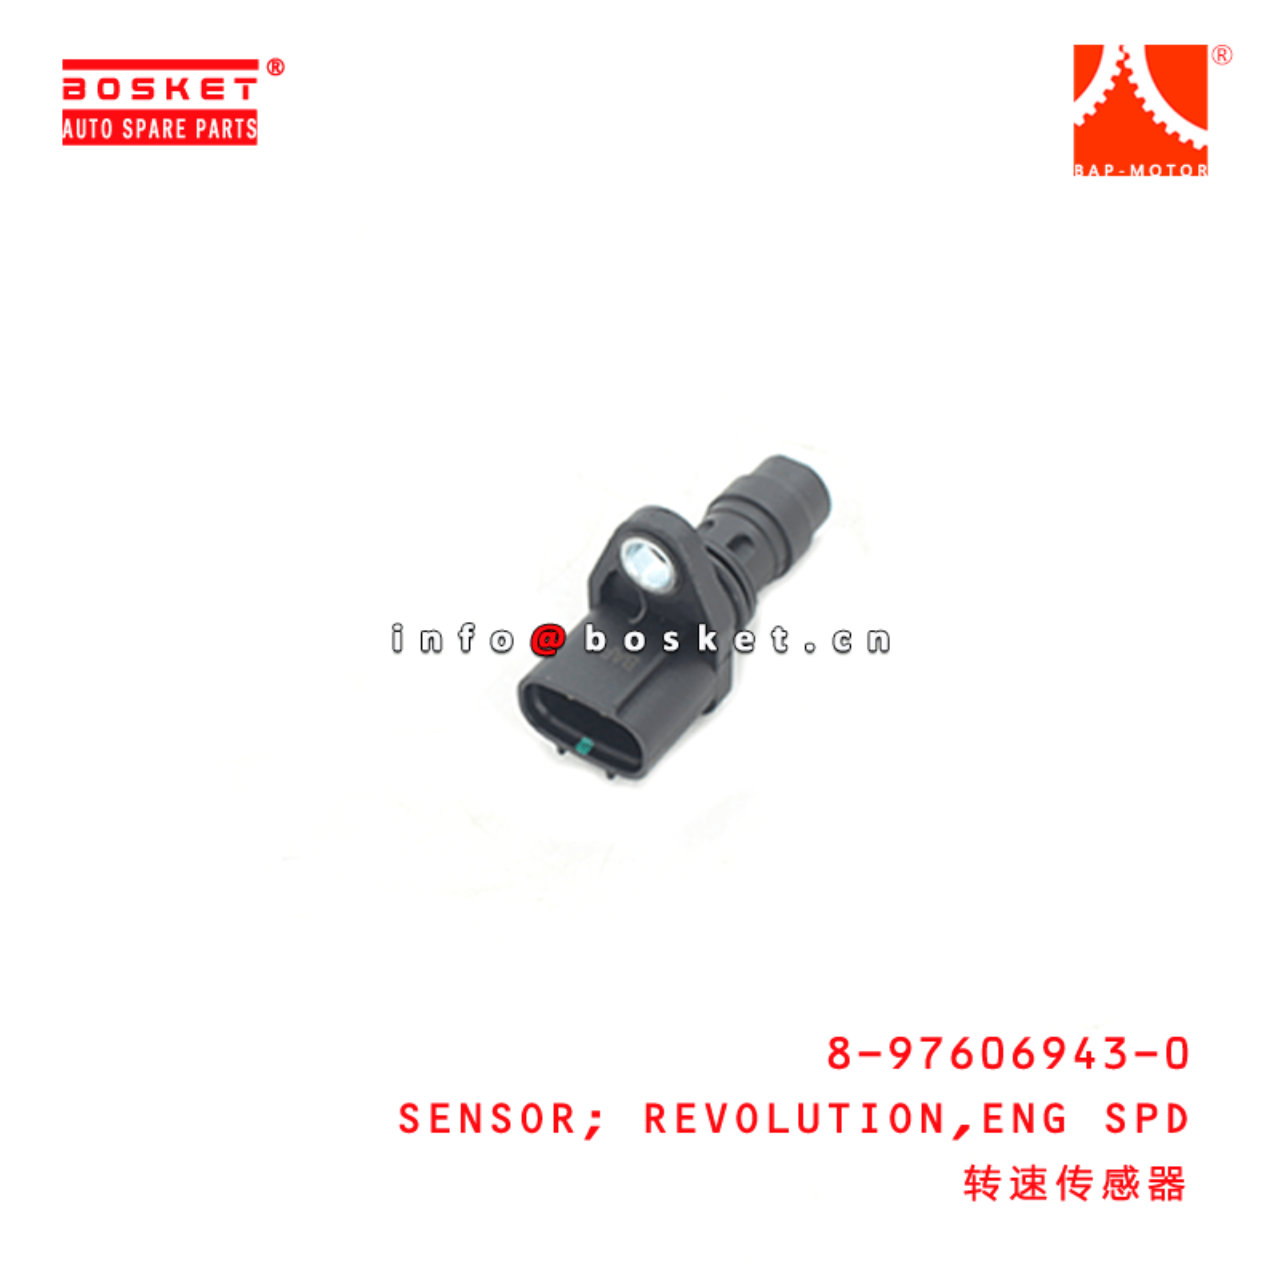 8-97606943-0 Engine Speed Revolution Sensor 8976069430 Suitable for ISUZU ELF 4HK1 